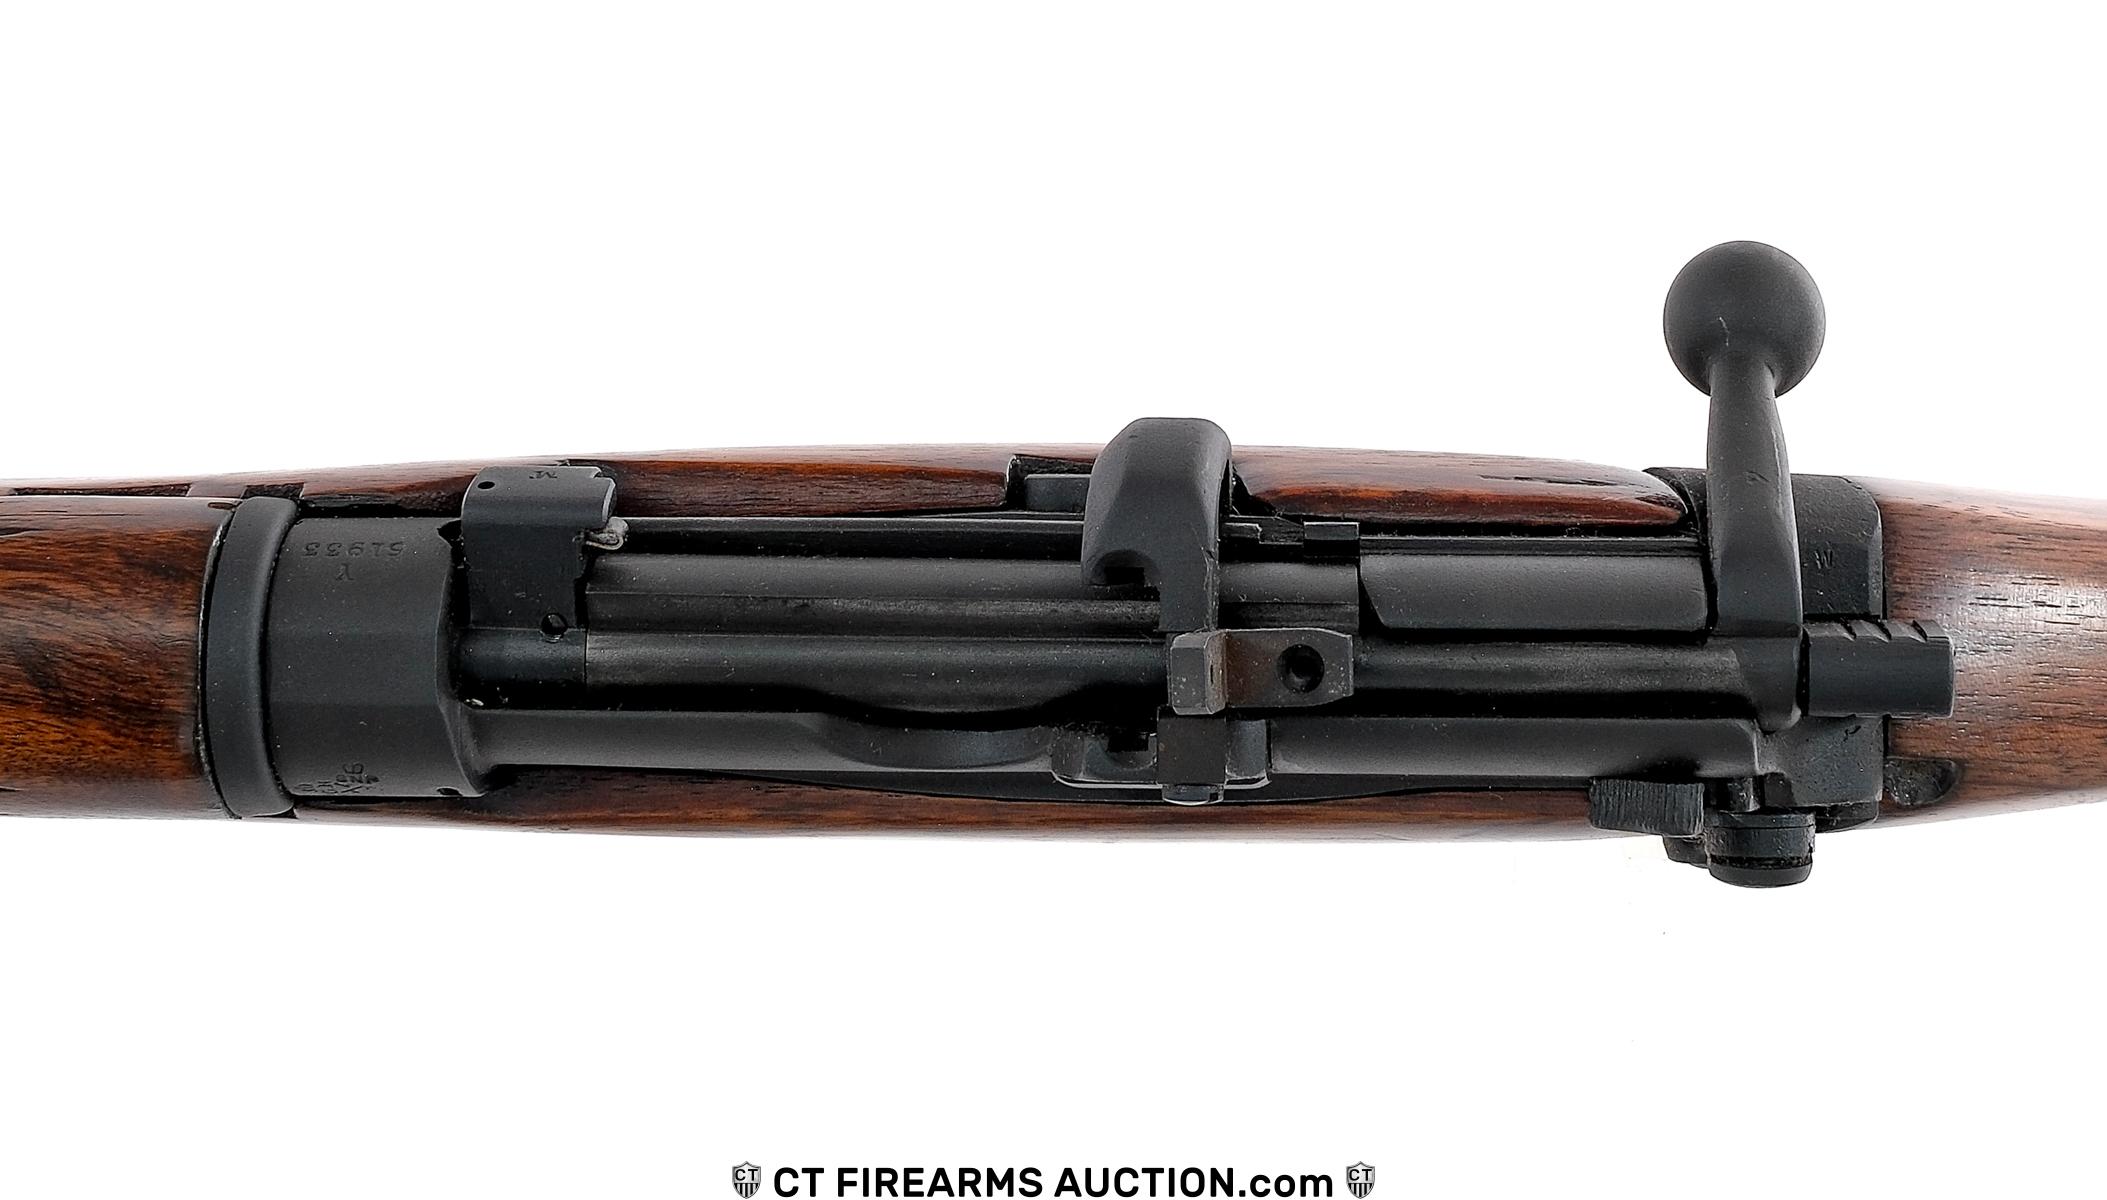 Santa Fe Jungle Carbine .303 British Bolt Rifle